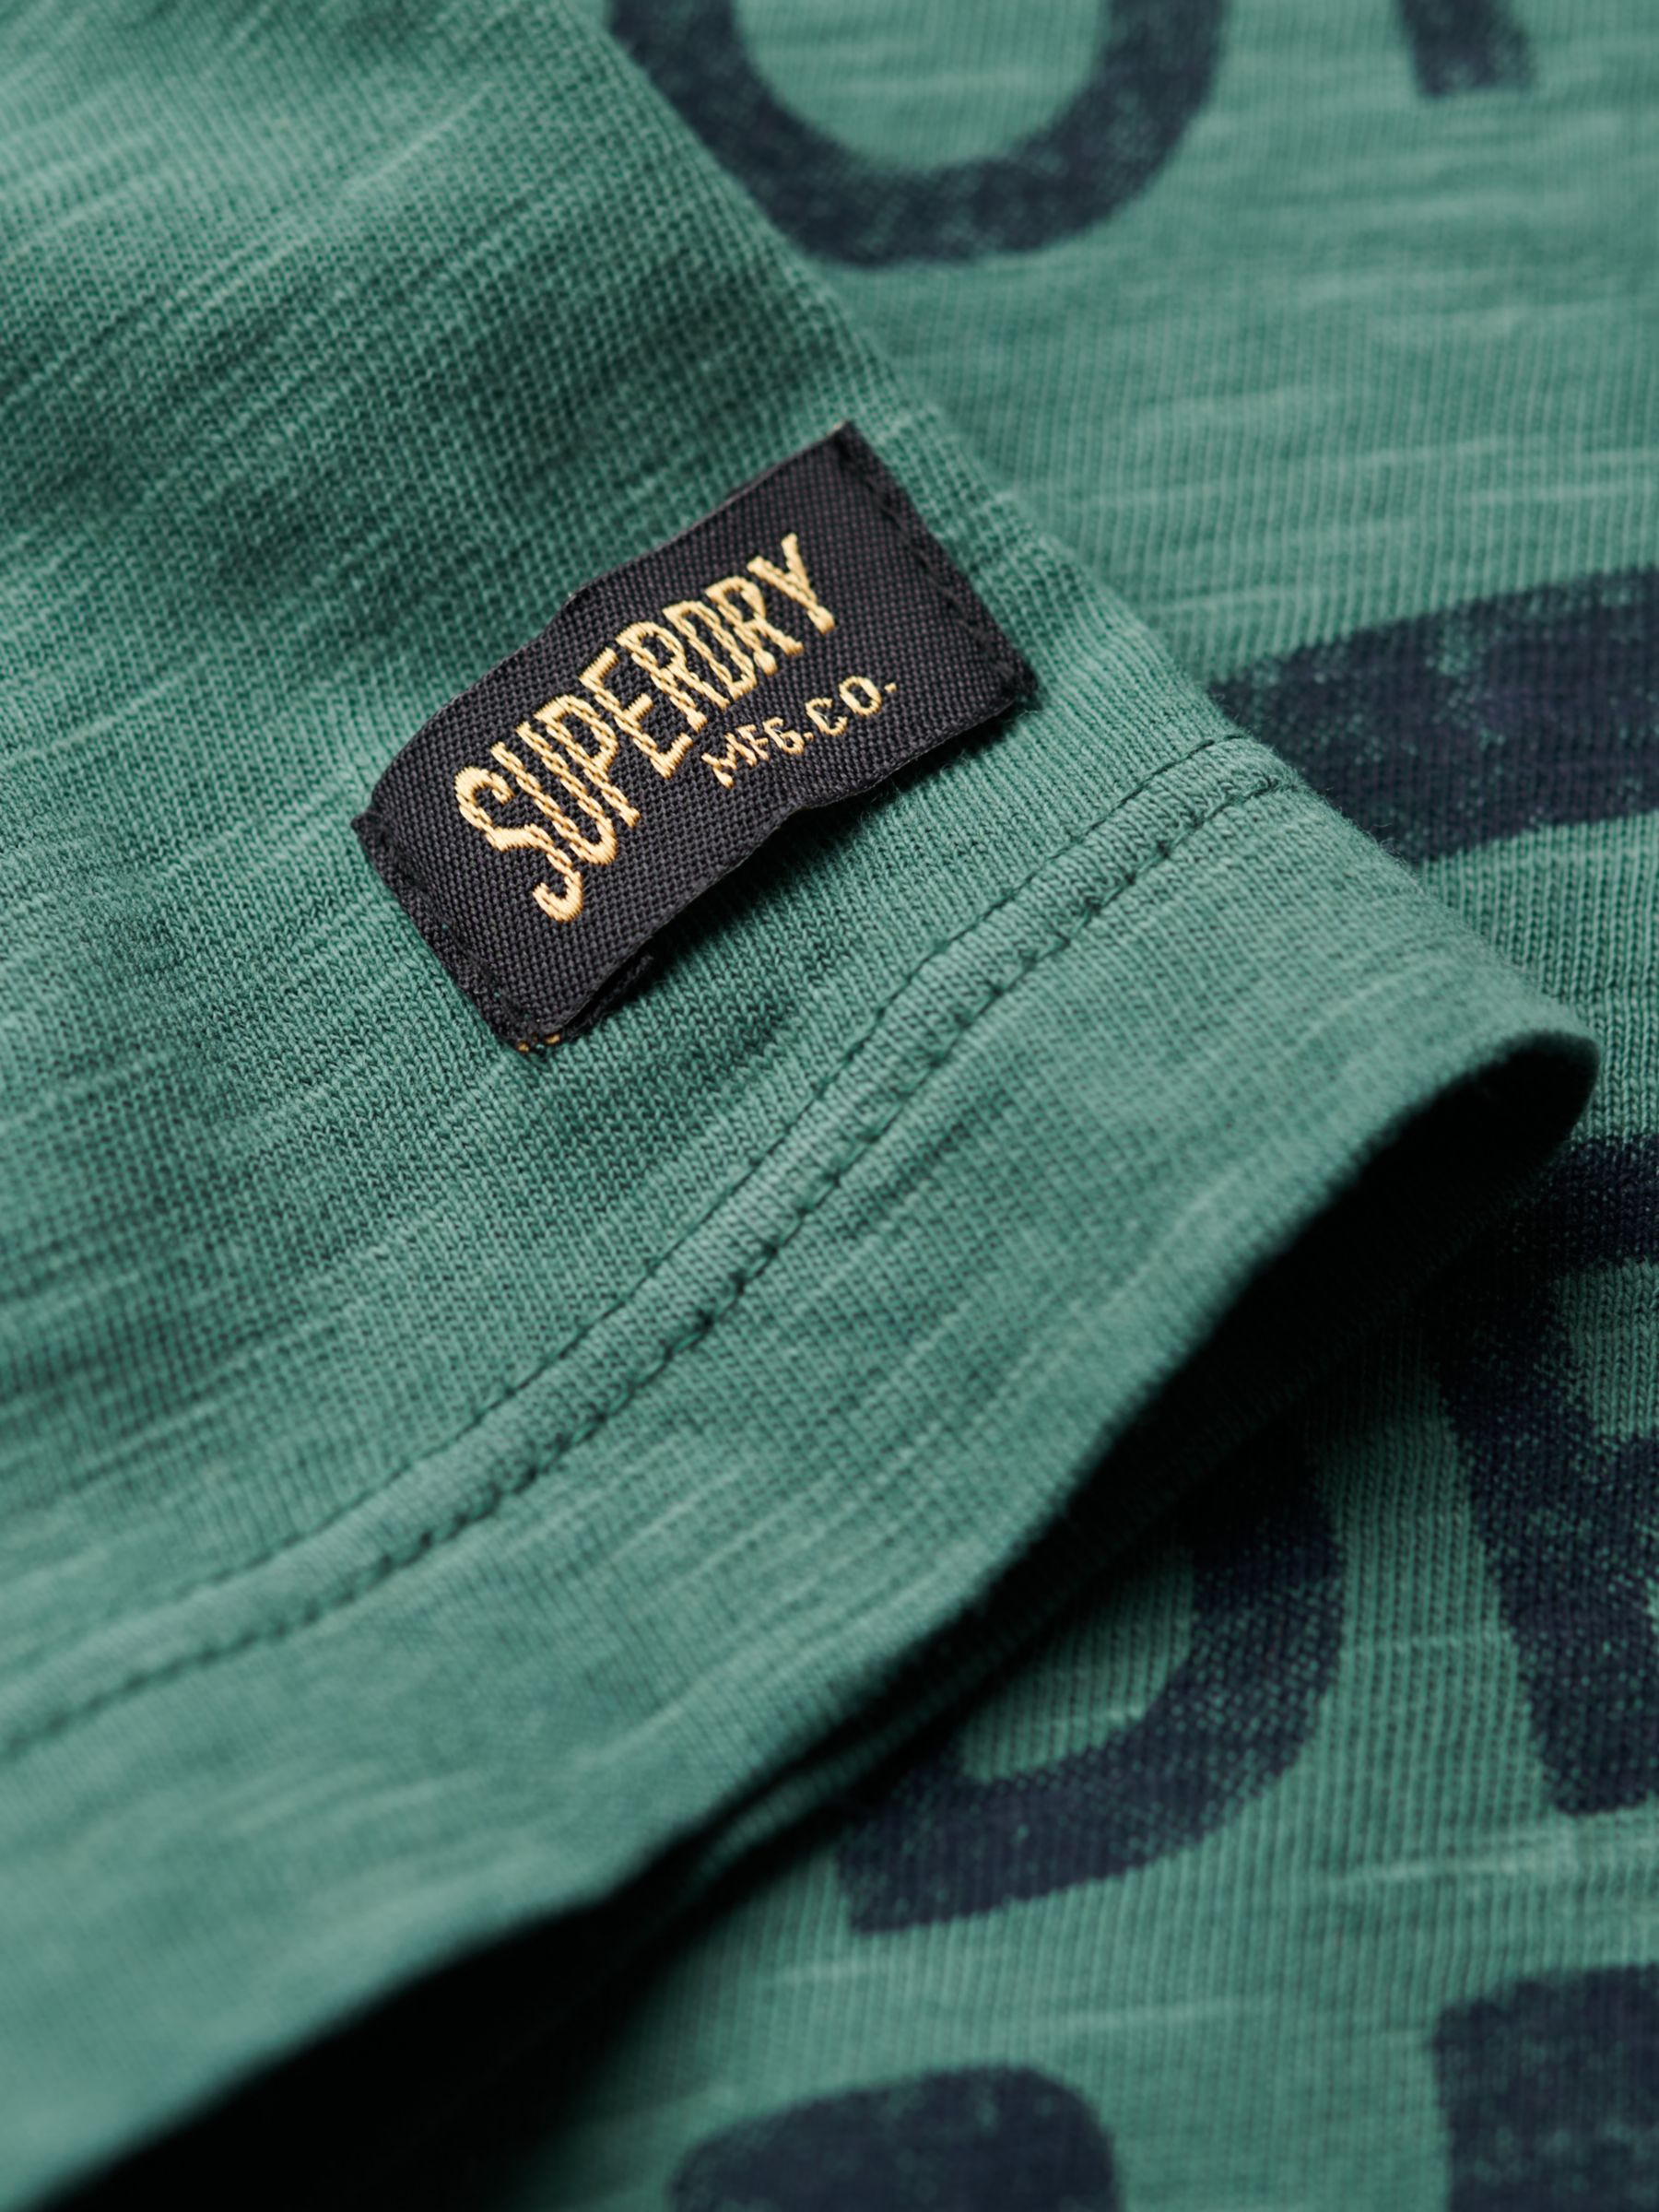 Superdry Copper Label Script T-Shirt, Drius Green Slub, XXL